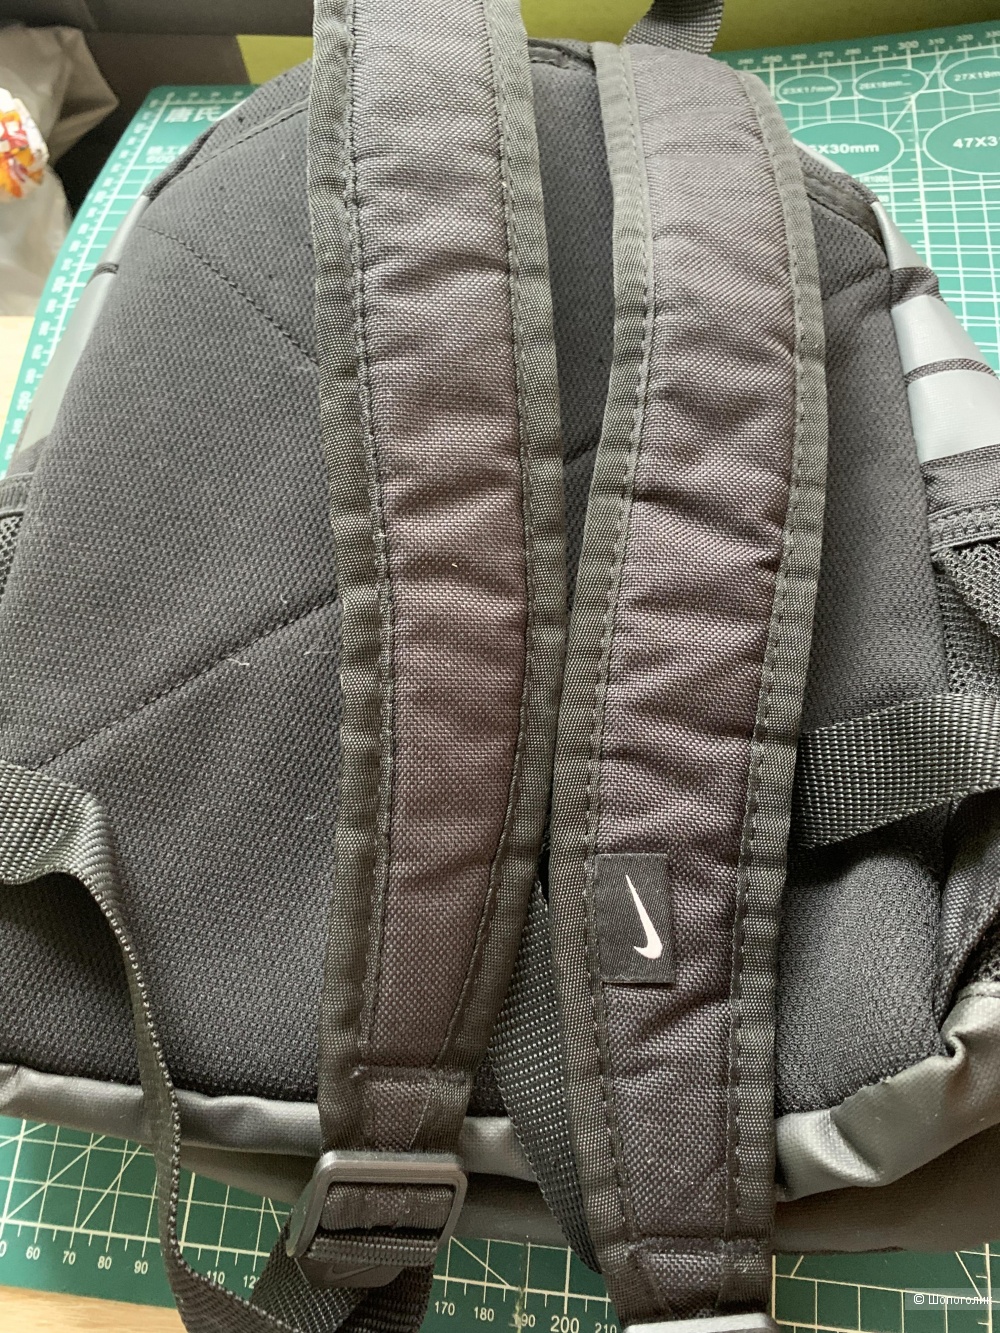 Рюкзак, Nike, one size